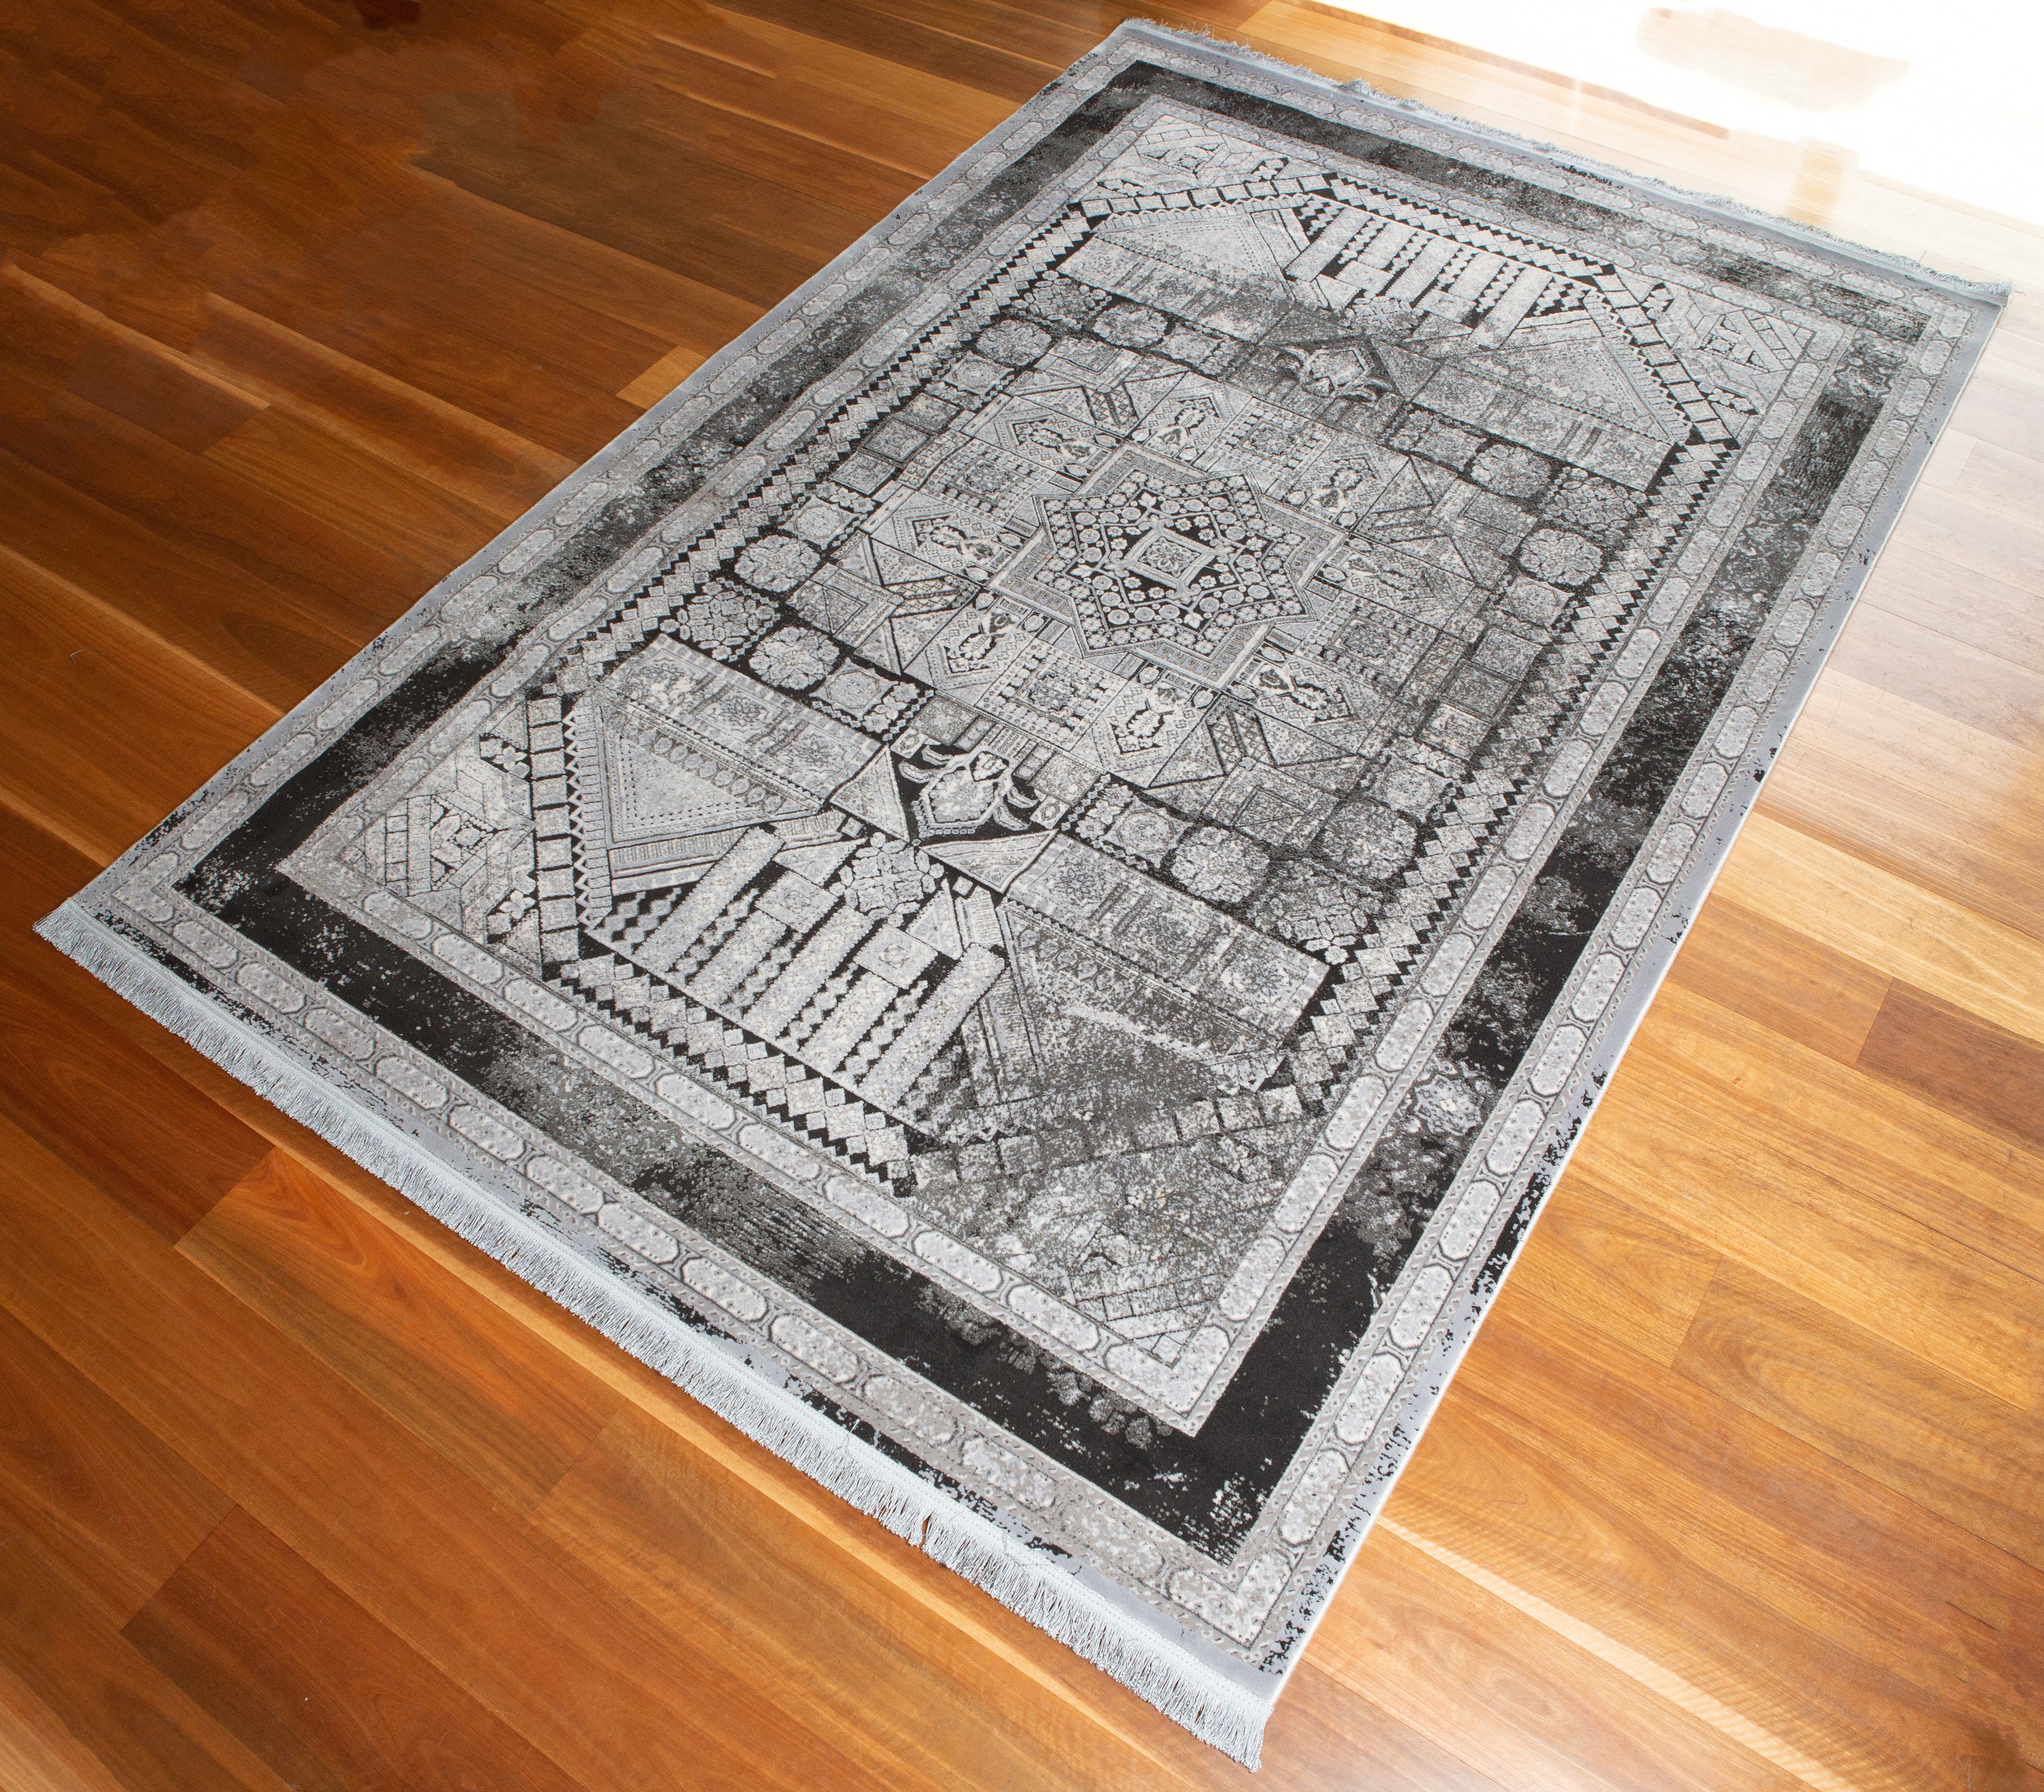 Persian floor rug light grey and Black geometric tree of life styled design on a wood panel floor.